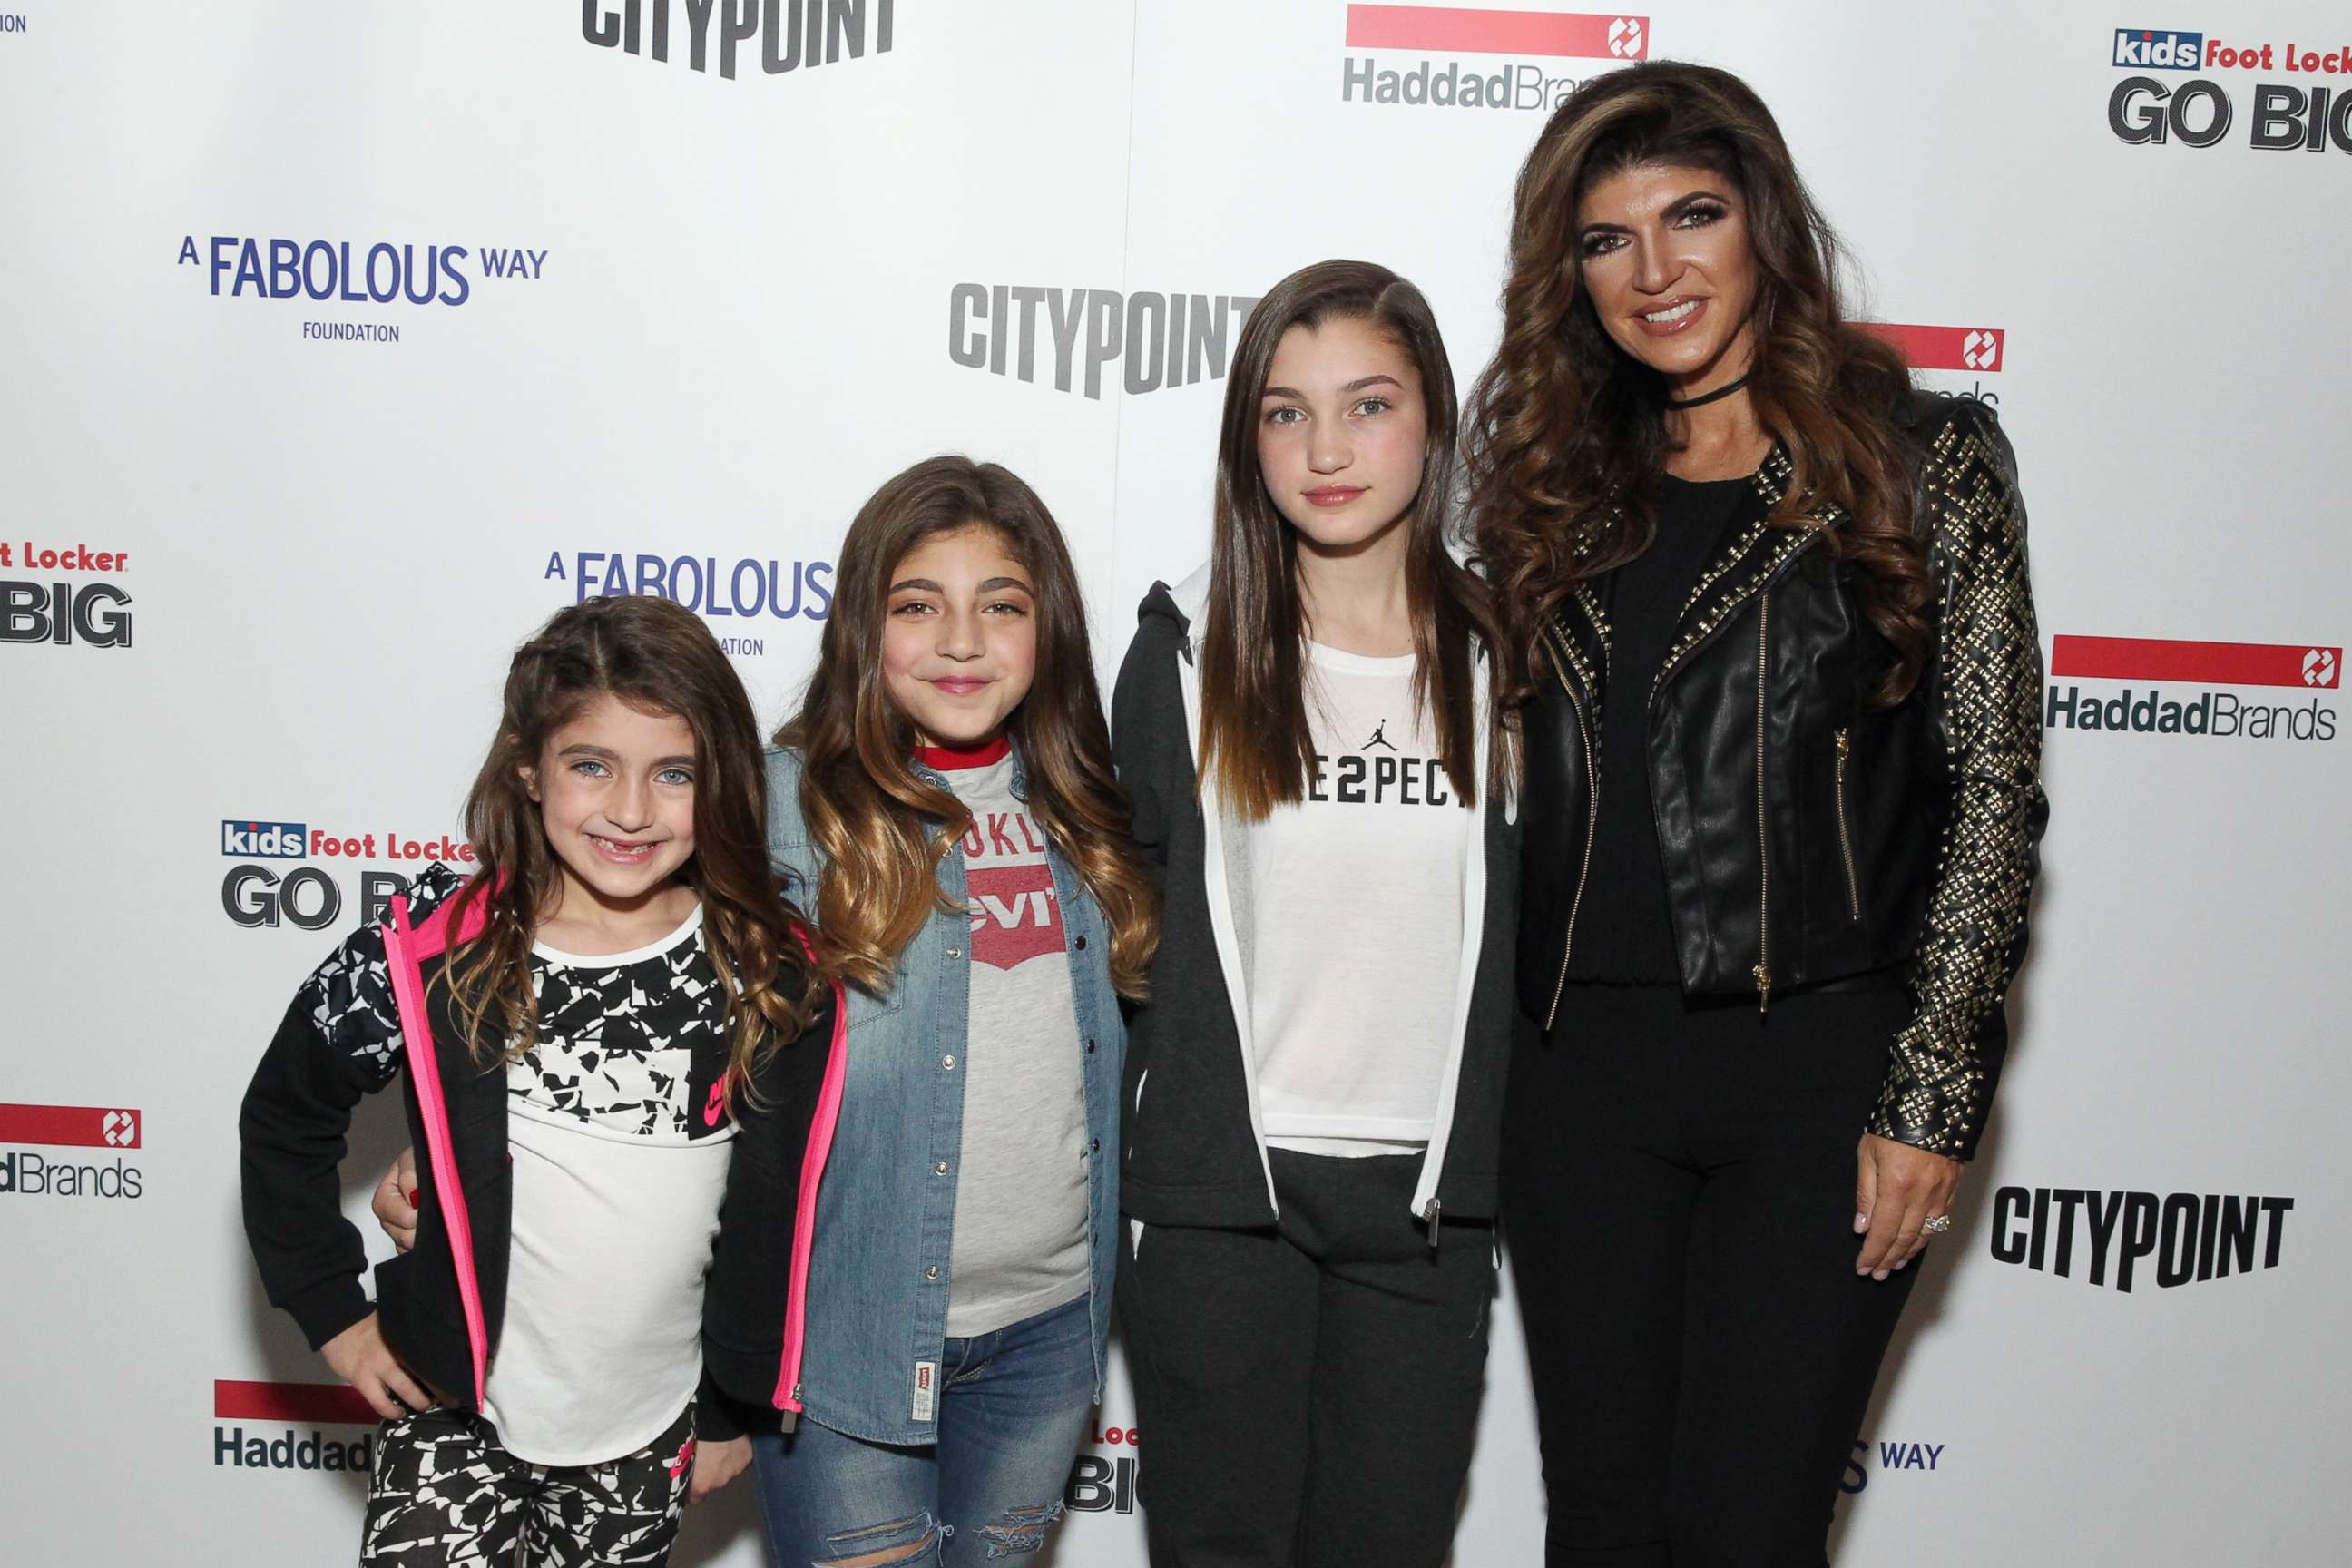 PHOTO: (L-R) Audriana Giudice, Milania Giudice, Gabriella Giudice, and Teresa Giudice attend BKLYN Rocks presented by City Point, Kids Foot Locker, and Haddad Brands at City Point, Nov. 9, 2016 in Brooklyn, New York. 